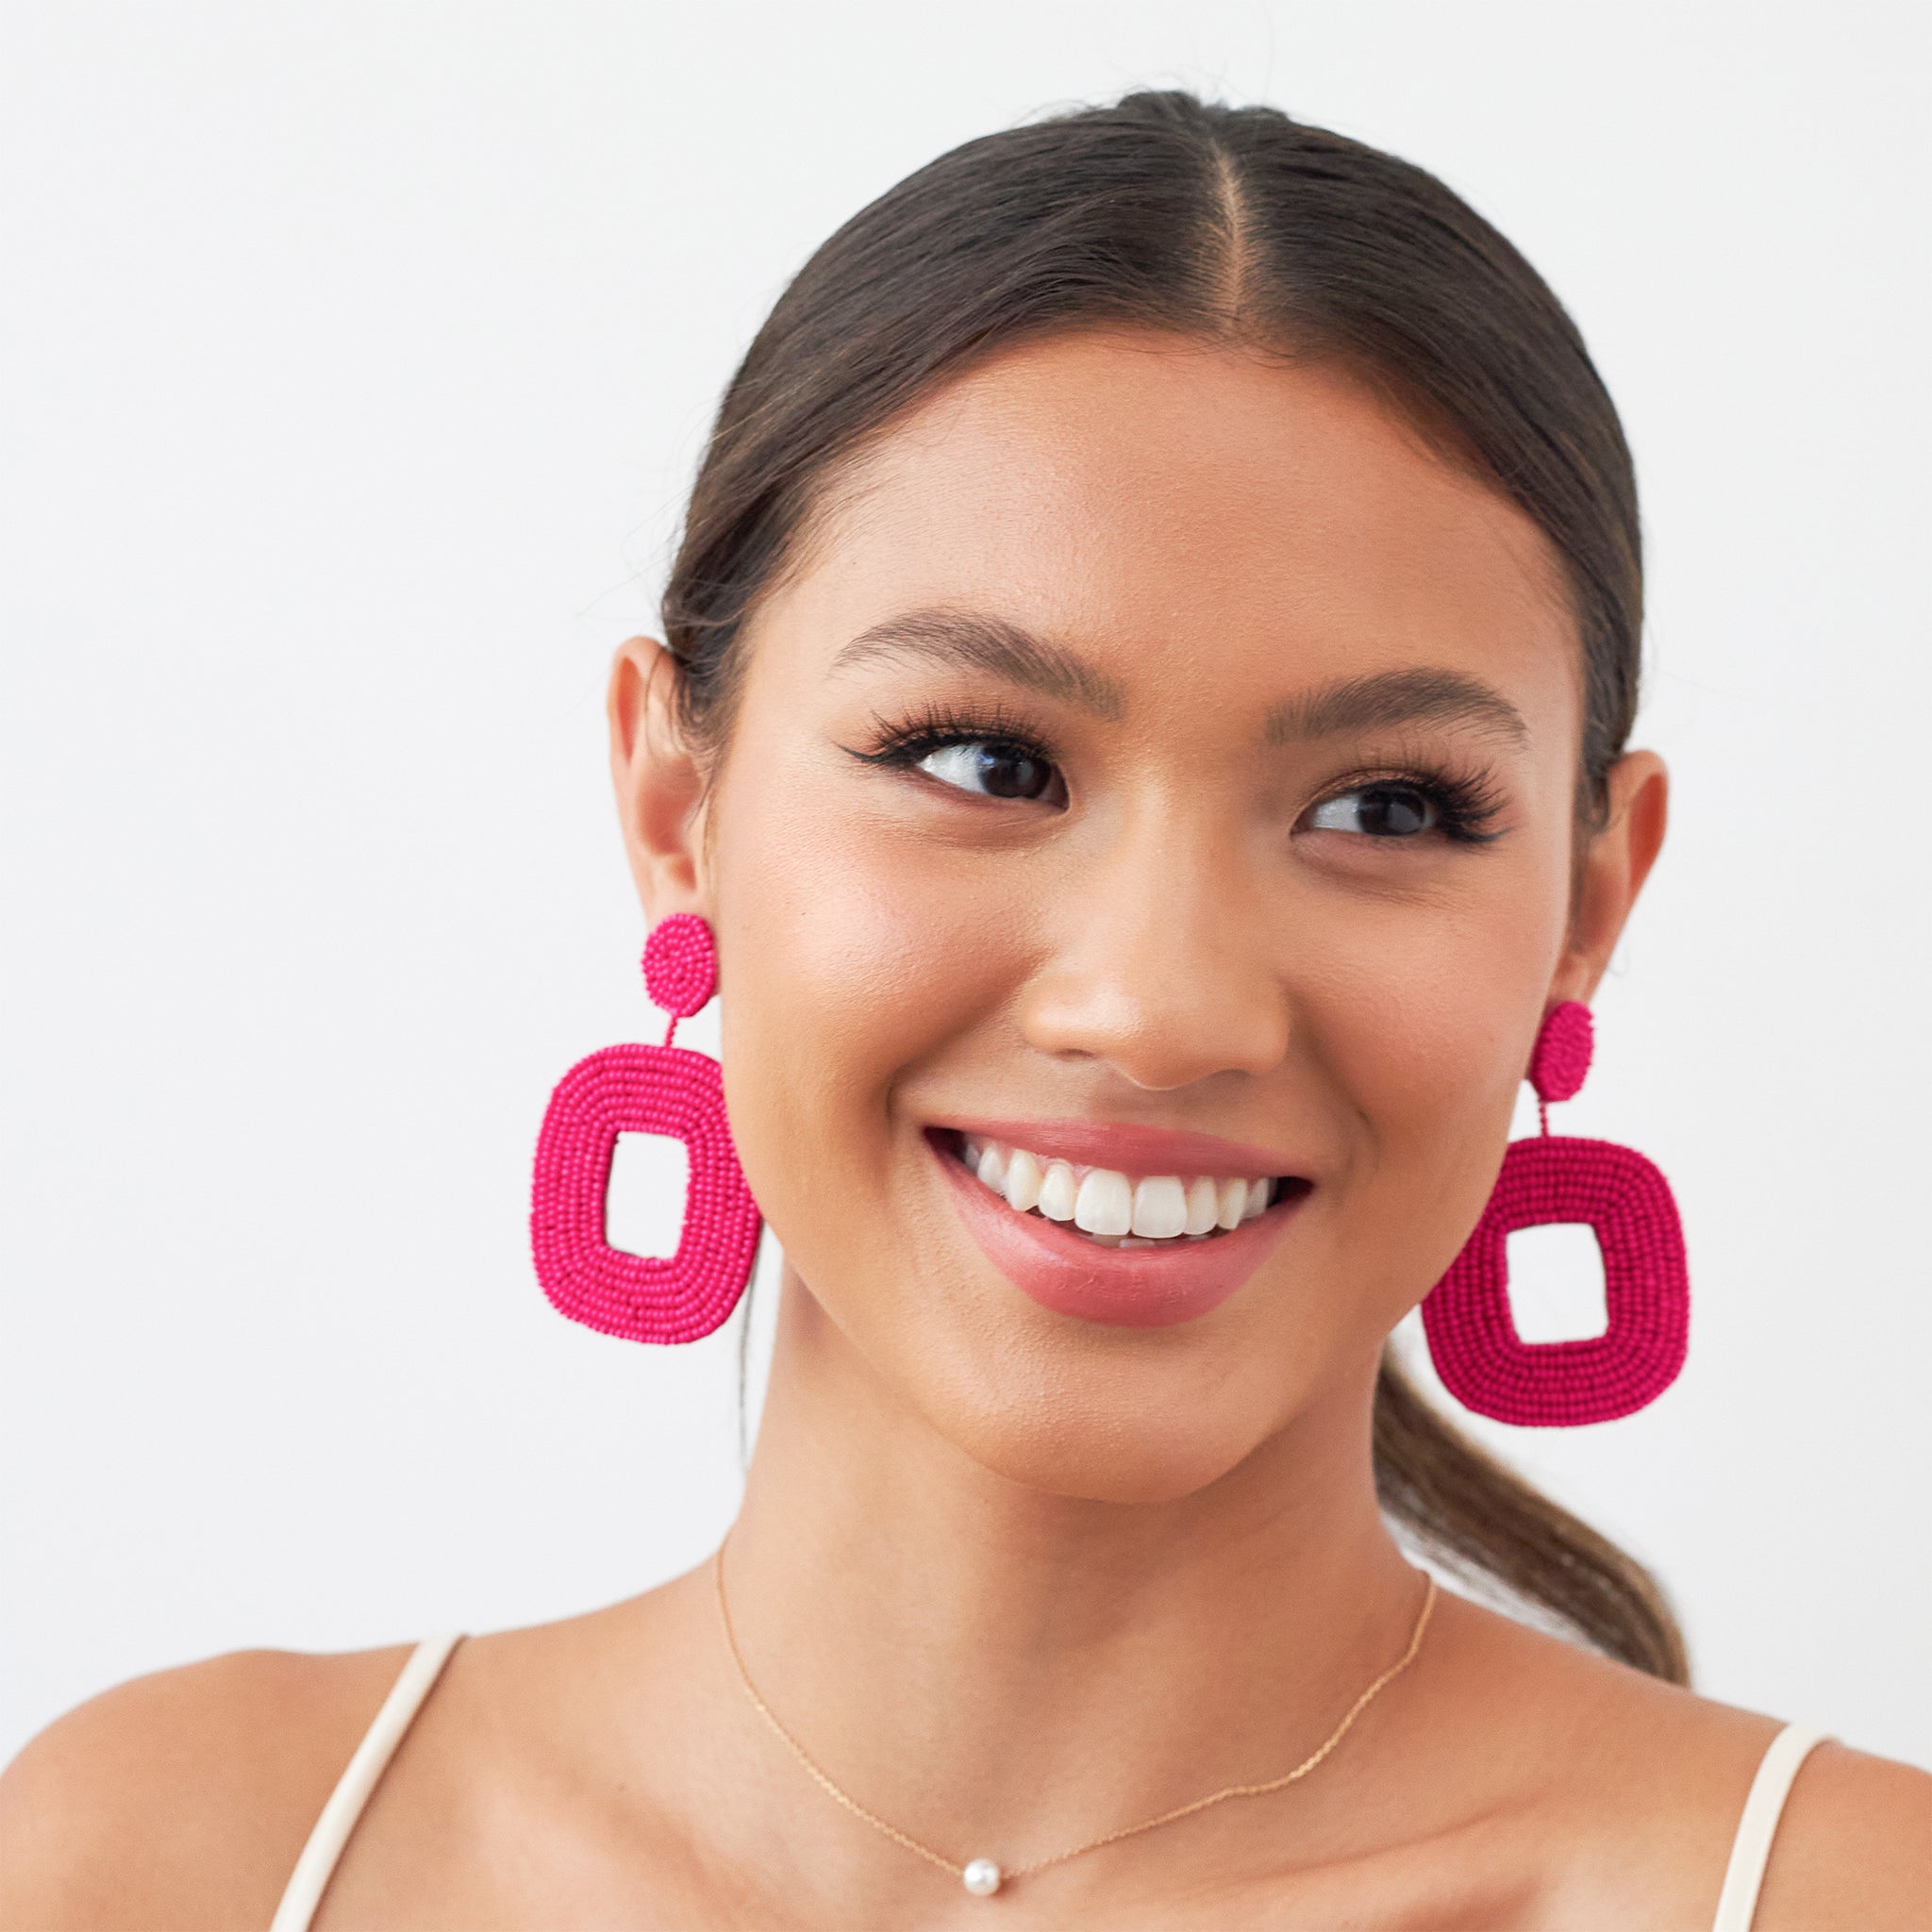 Beaded Drop Earrings in Pink